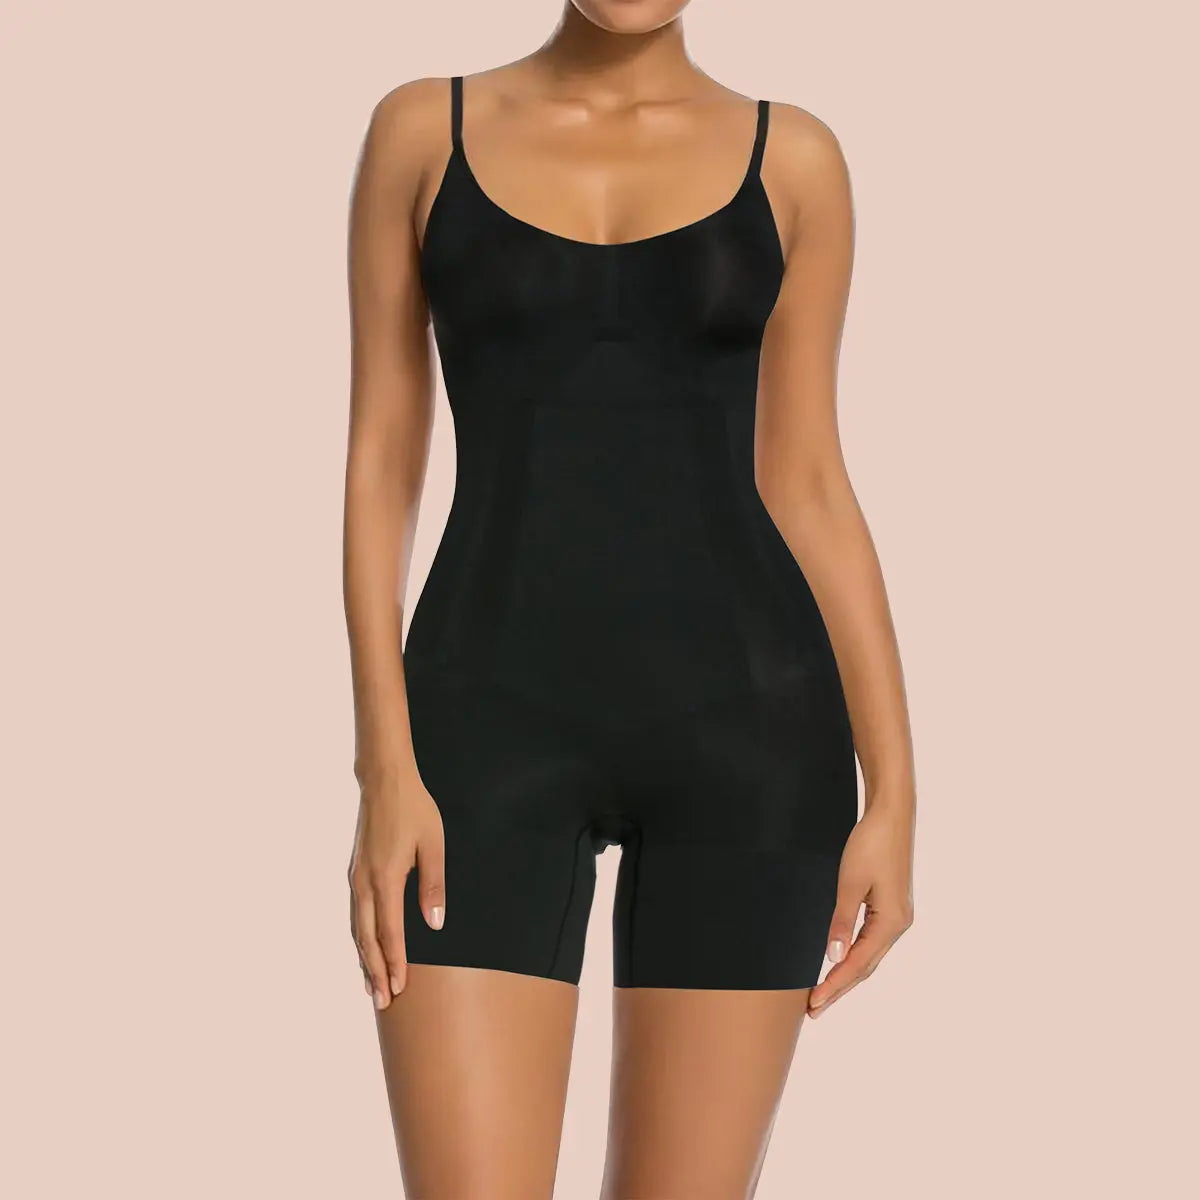 Buy SOZENN Bodysuit for Women Tummy Control Shapewear Seamless Sculpting  Thong Body Shaper Tank Top (L/XL) at